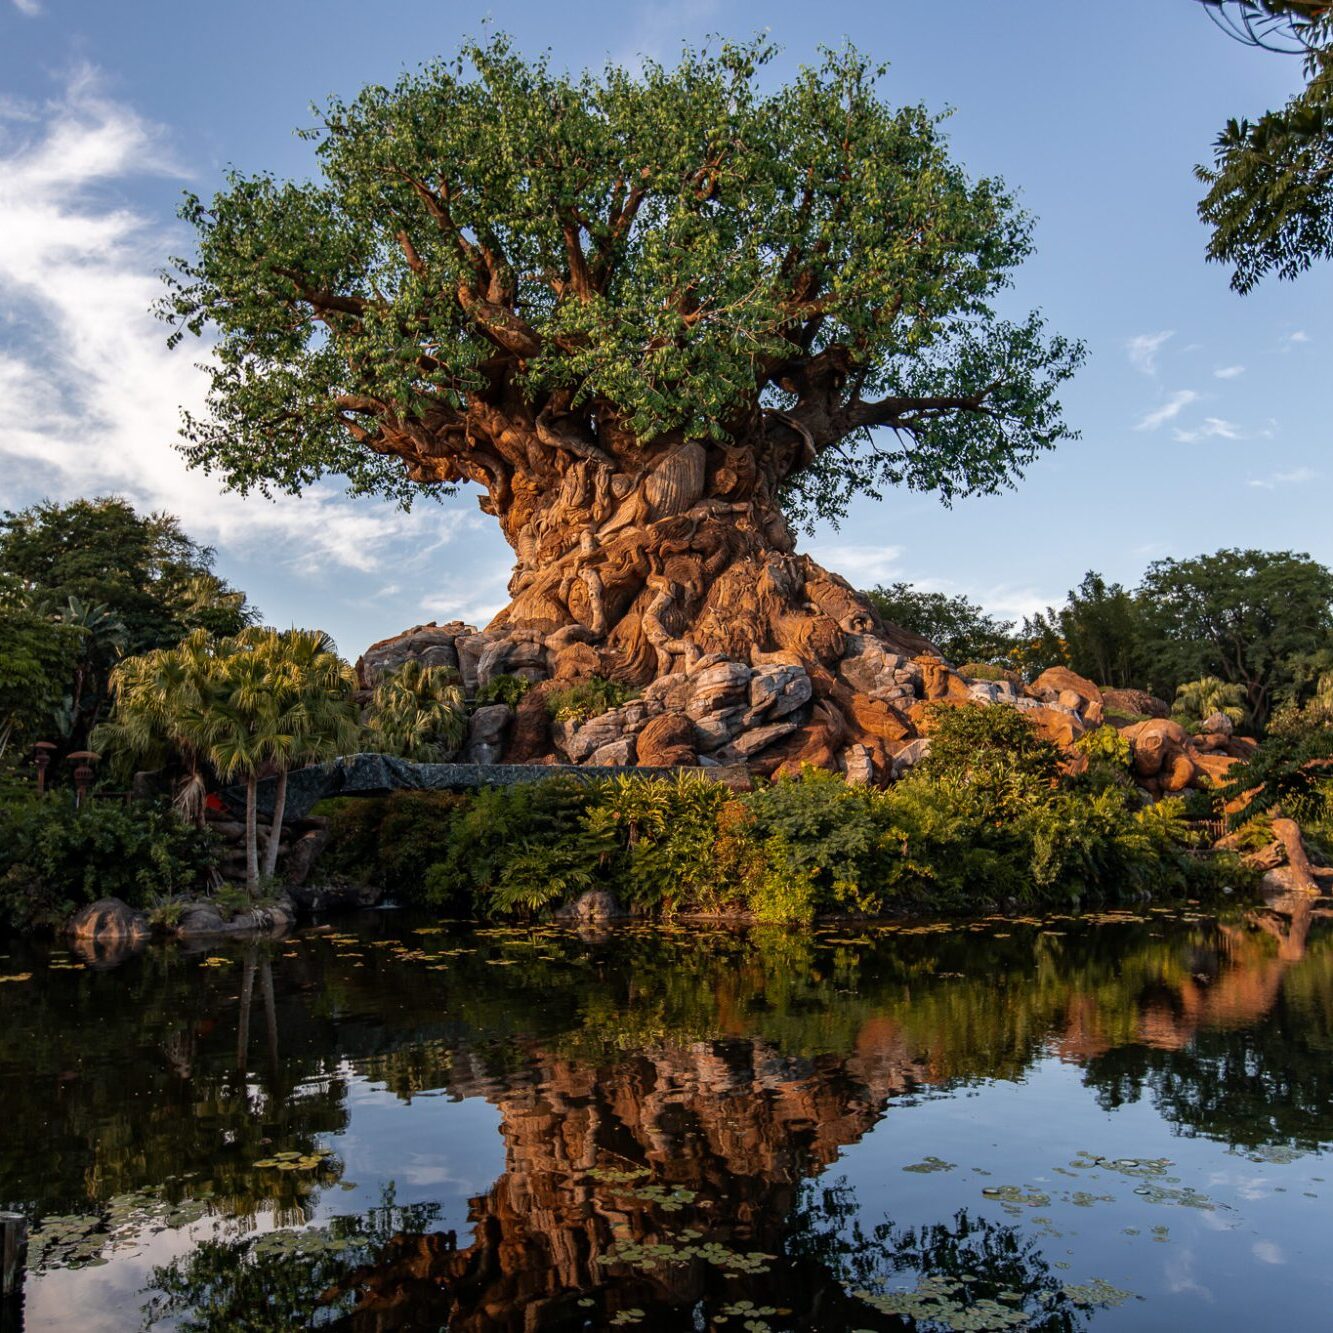 Animal Kingdom Walt Disney World Florida Theme Park Travel Guide Tree of Life